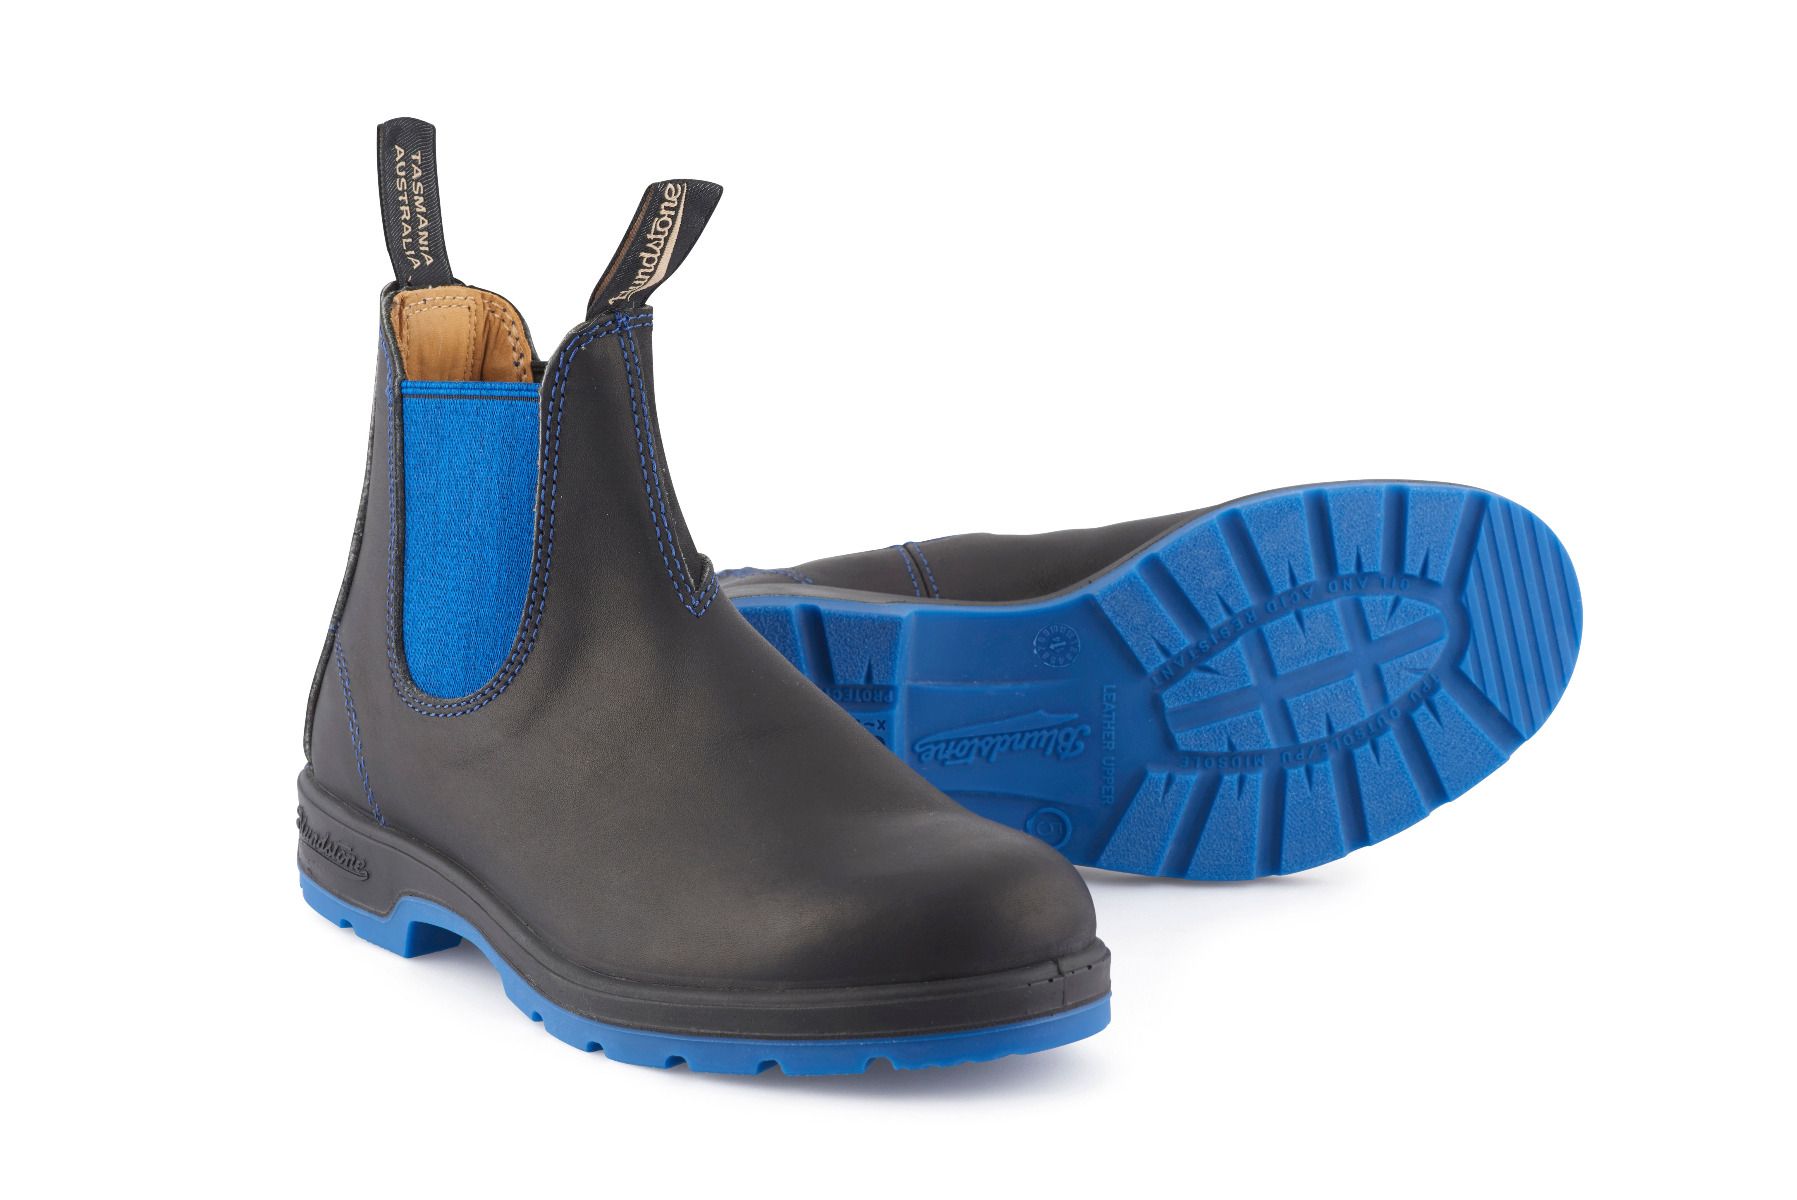 Blundstone 1403 Chelsea Boots Blue /& Black premium Leather Australian Ankle Boot